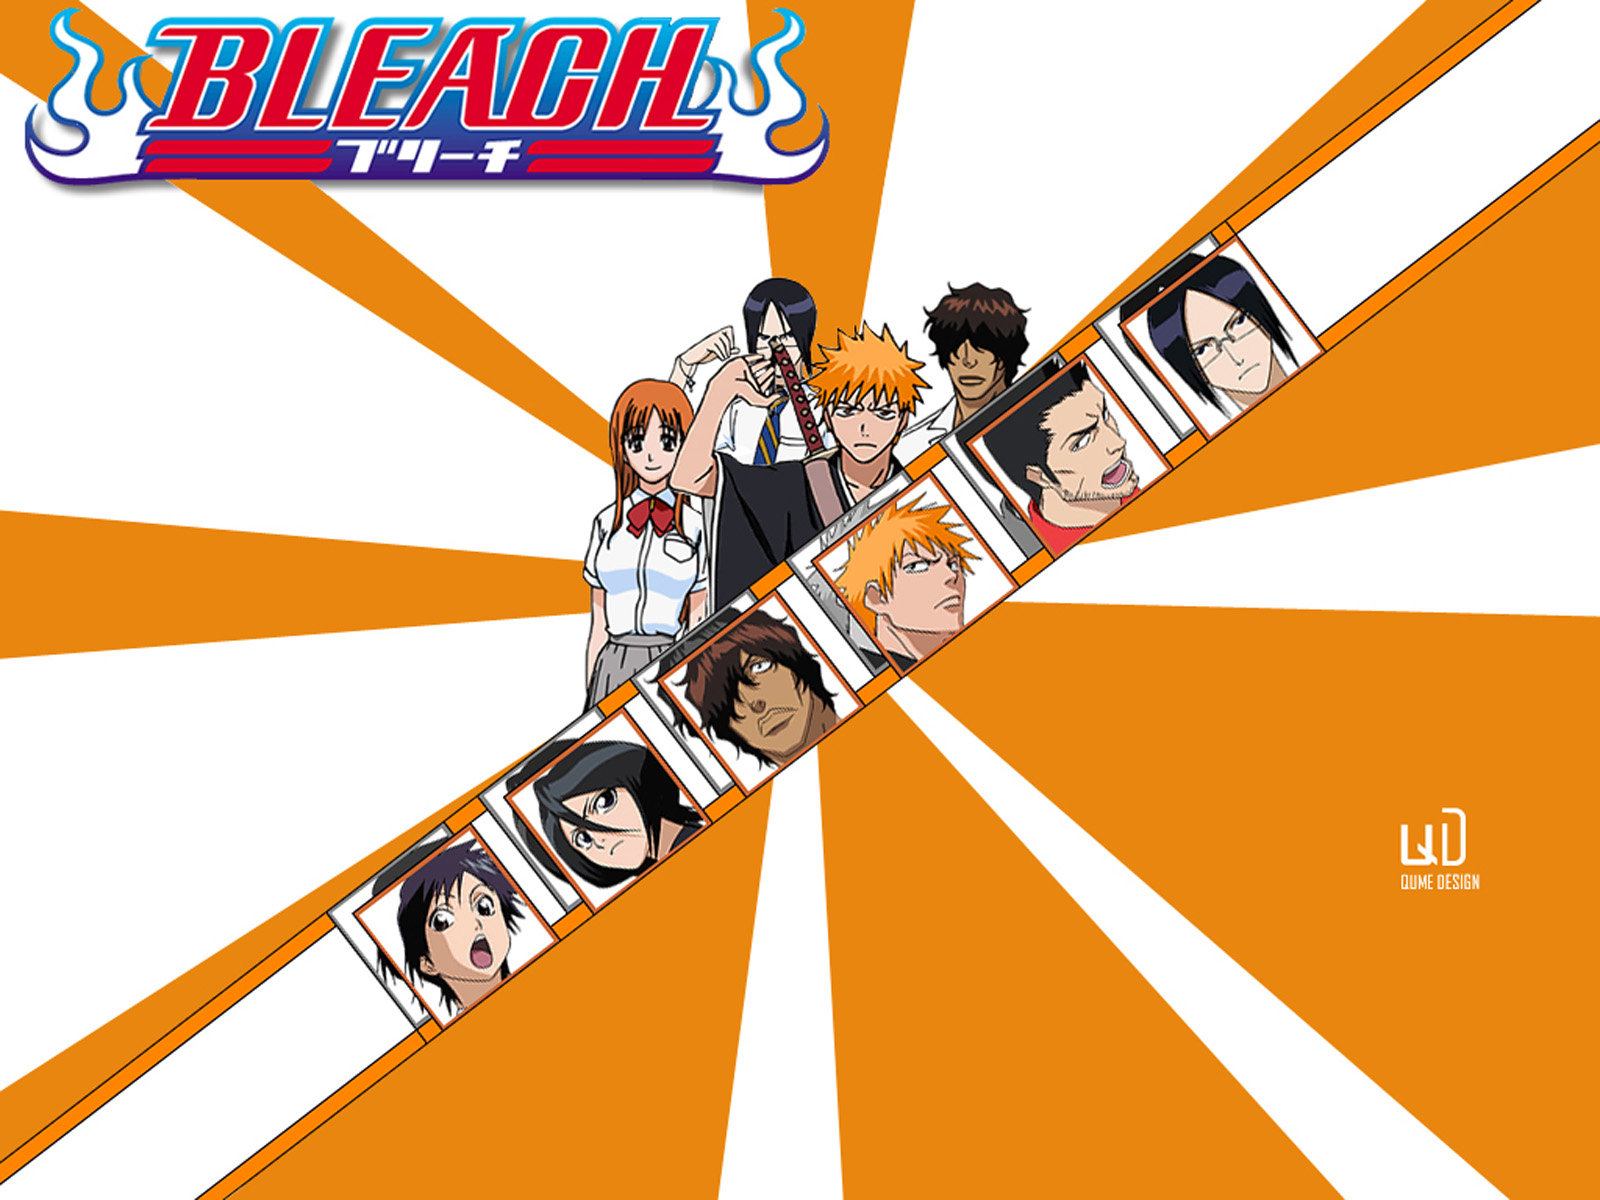 Laden Sie das Bleach, Animes, Ichigo Kurosaki, Orihime Inoue, Uryu Ishida, Yasutora Sado-Bild kostenlos auf Ihren PC-Desktop herunter